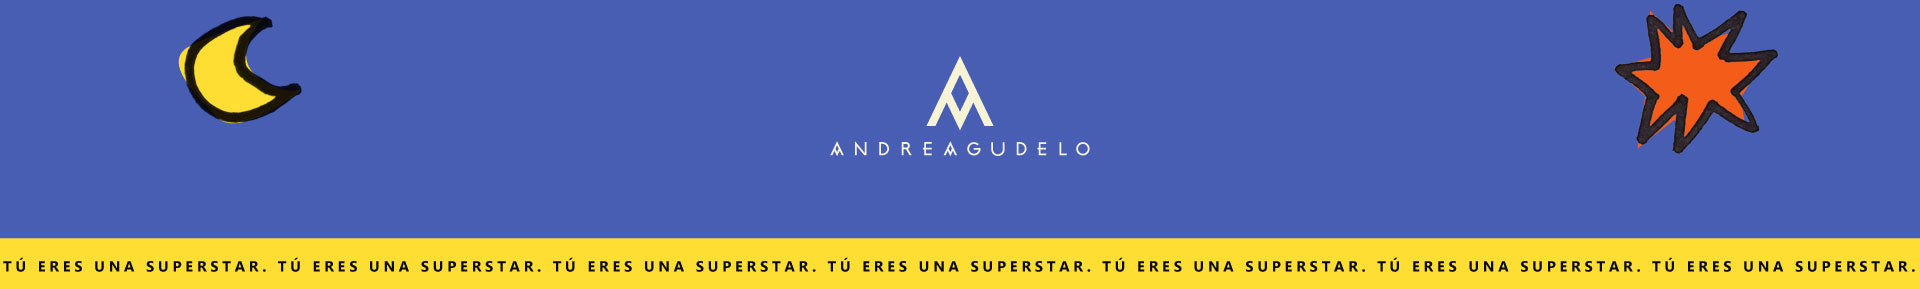 Emprender Andrea Agudelo